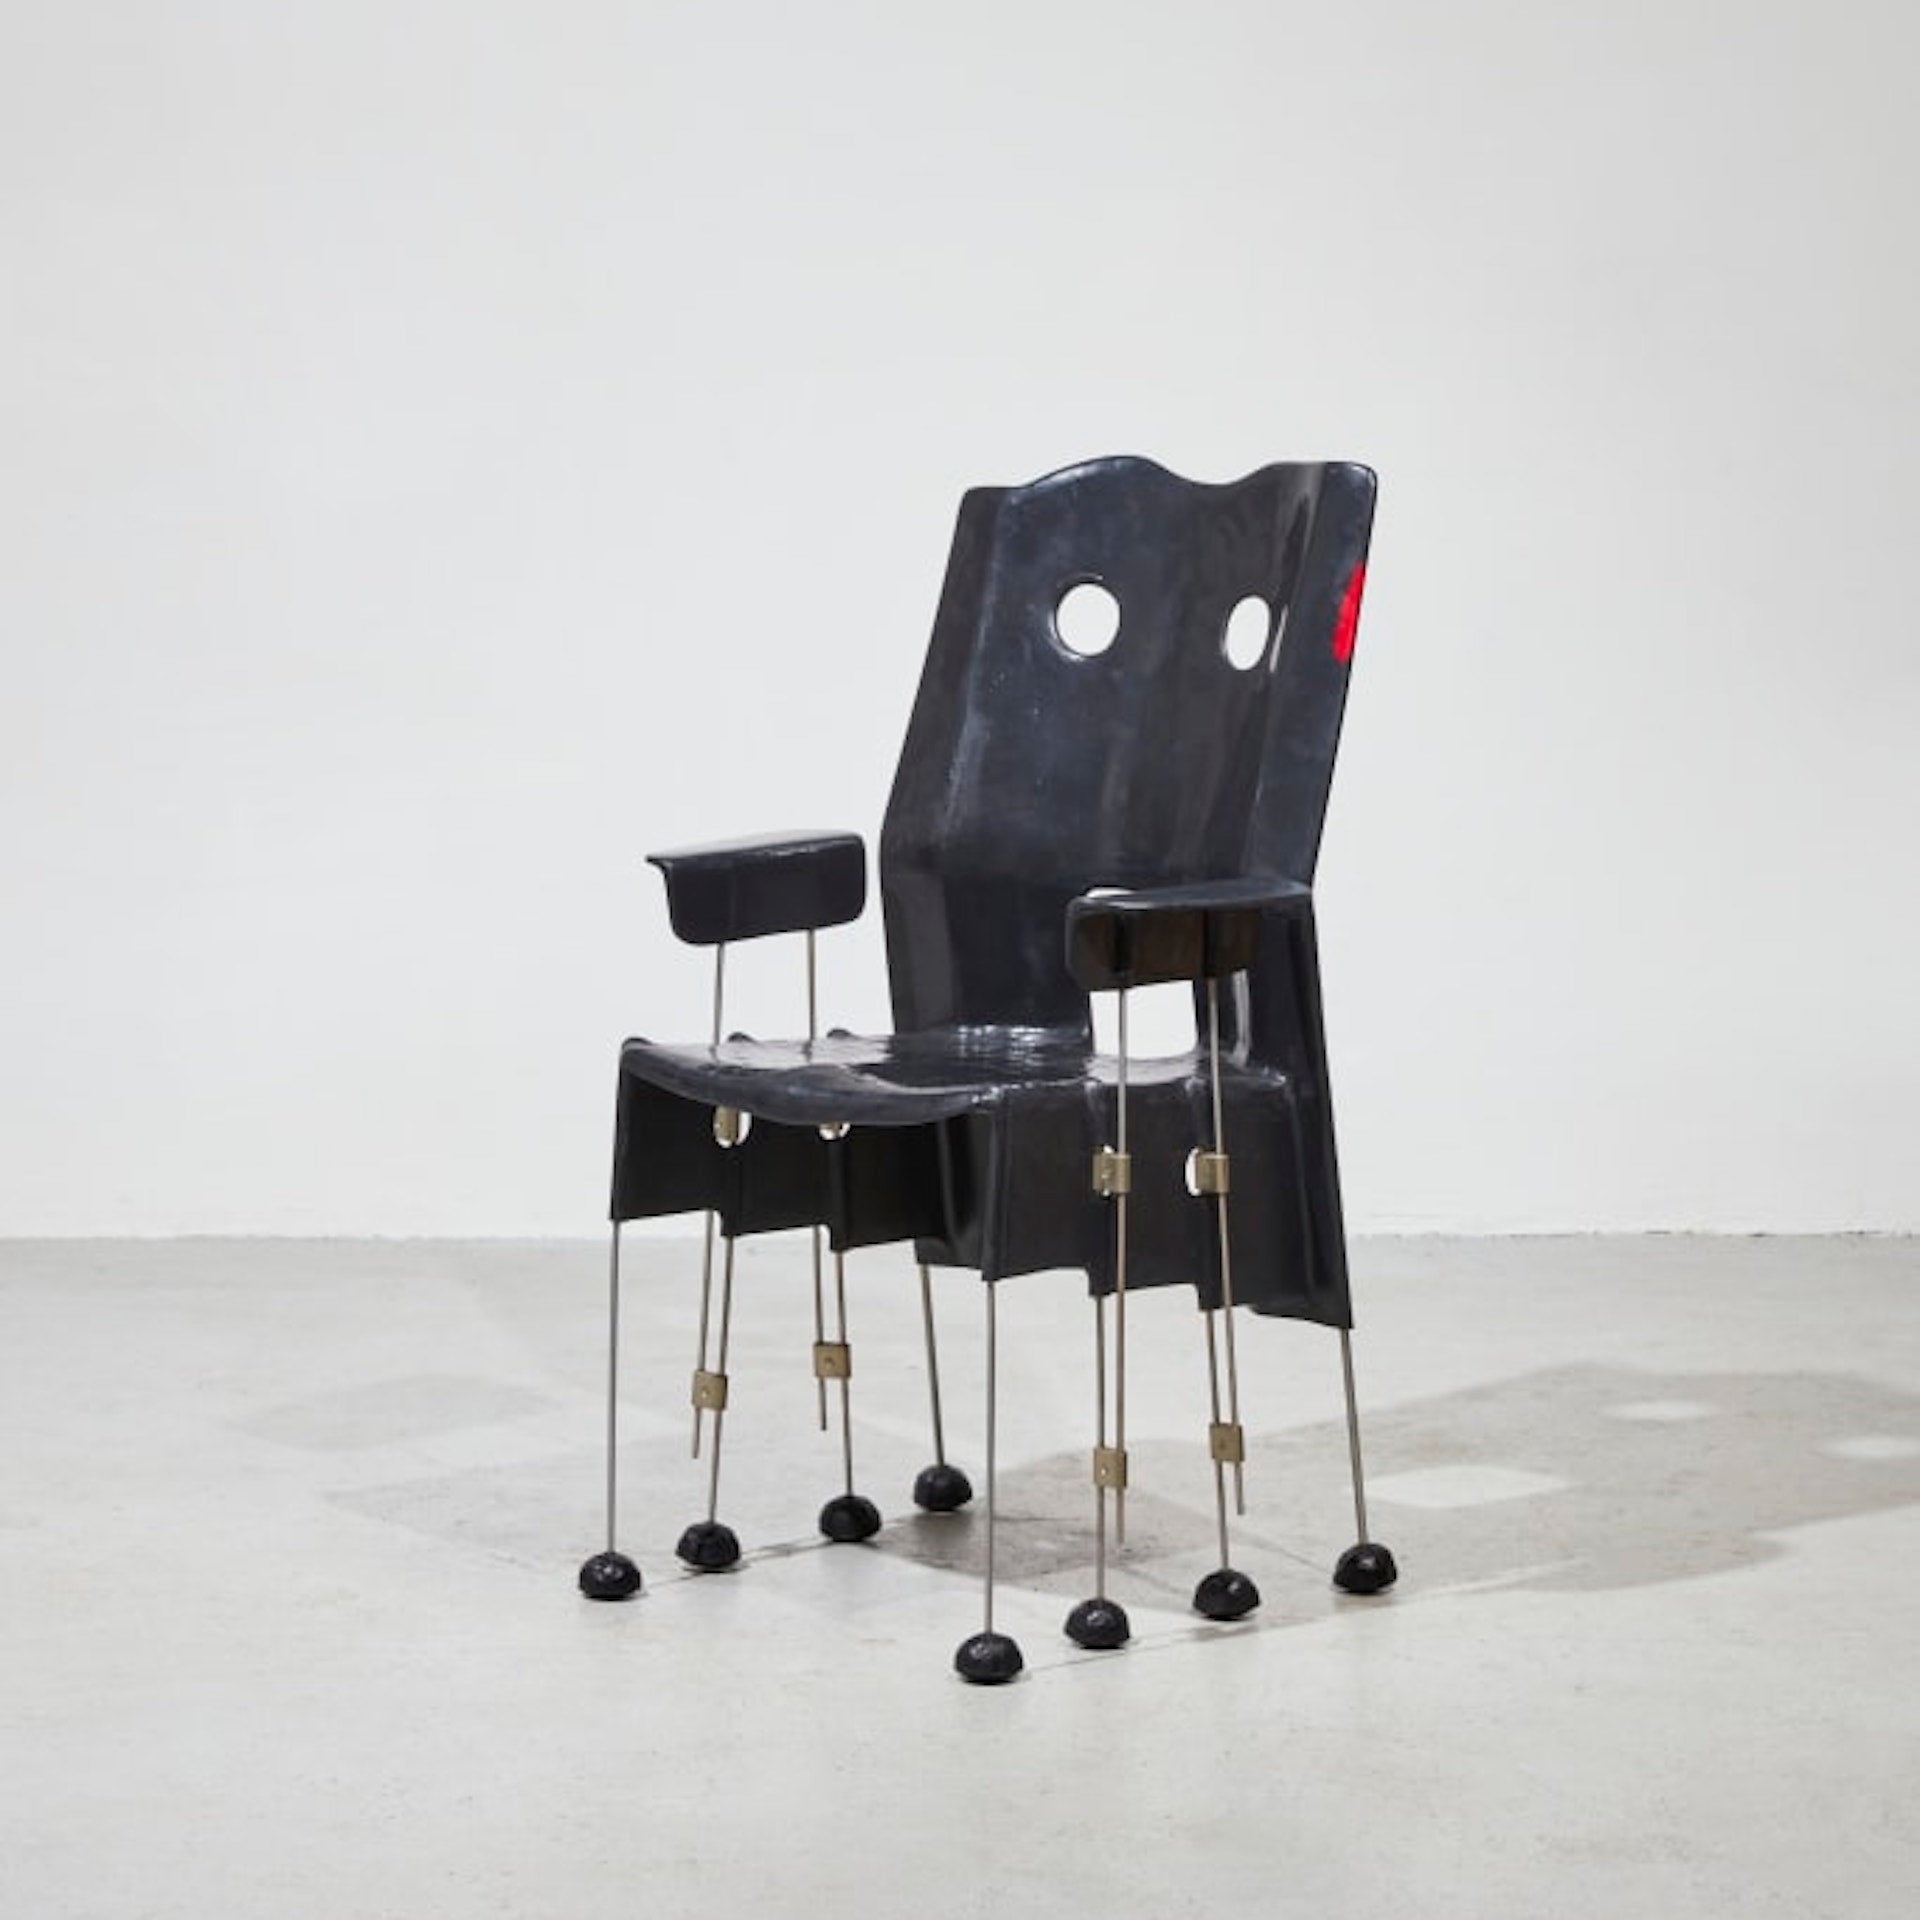 Gaetano Pesce's Green Street Chair (1984), presented by Ketabi Bourdet at Design Miami/ Basel 2023. Photo © Ketabi Bourdet